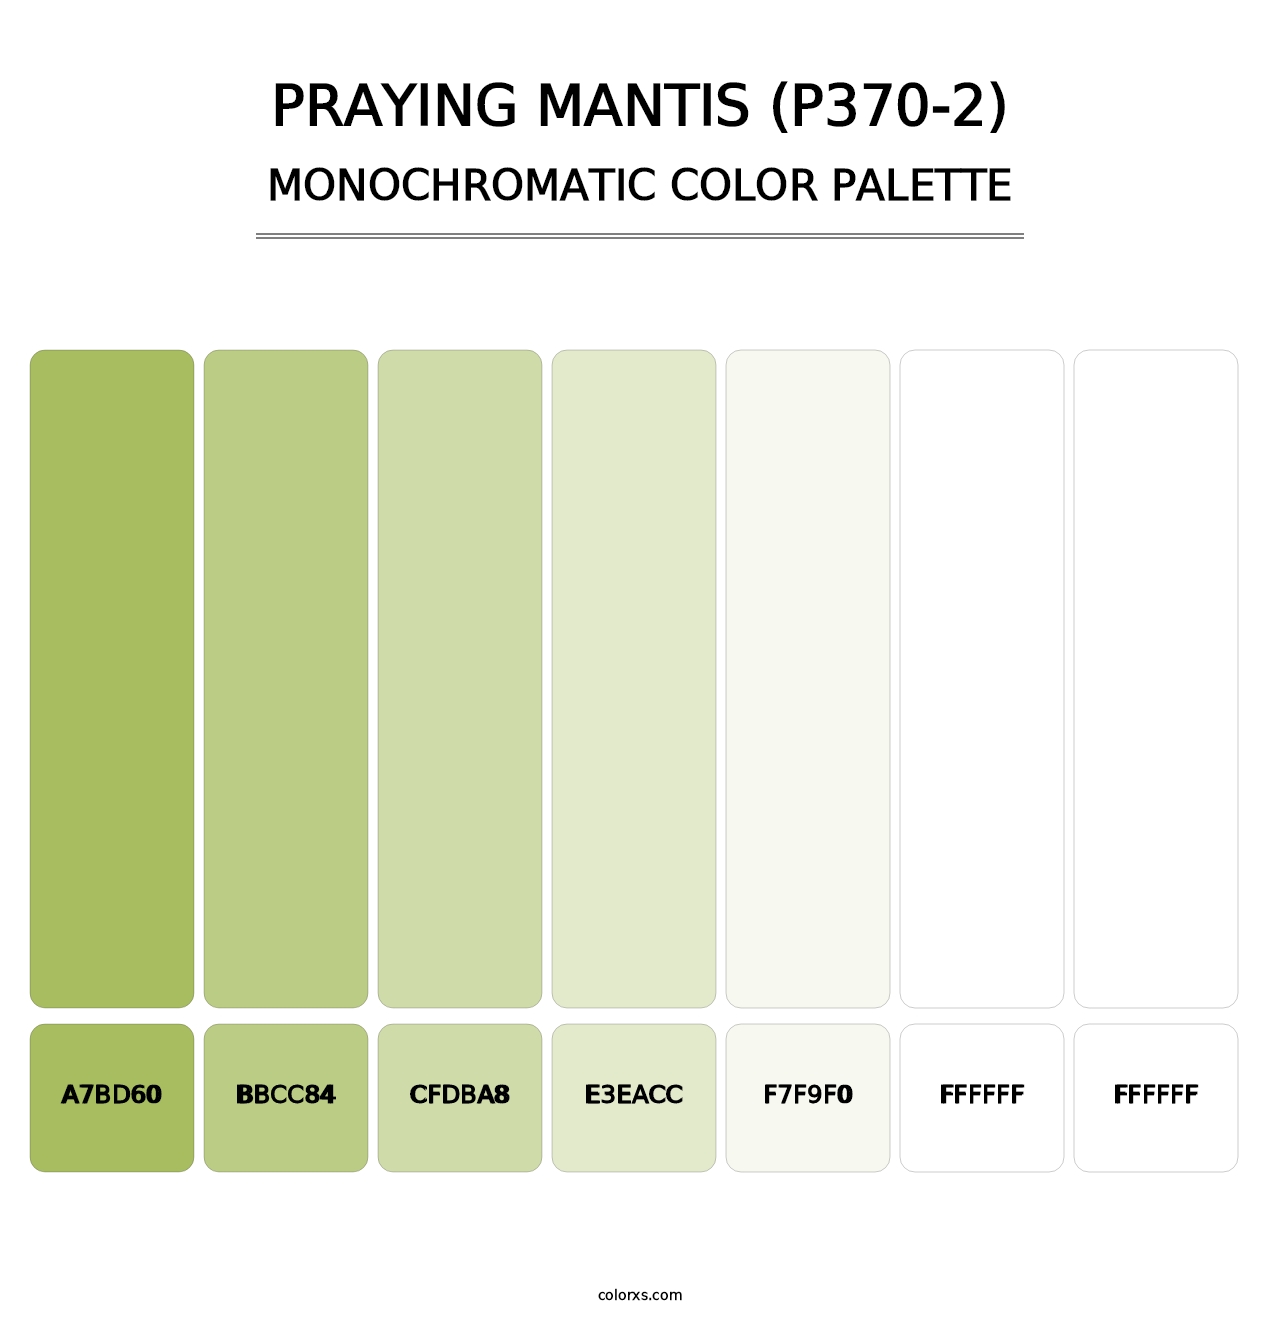 Praying Mantis (P370-2) - Monochromatic Color Palette